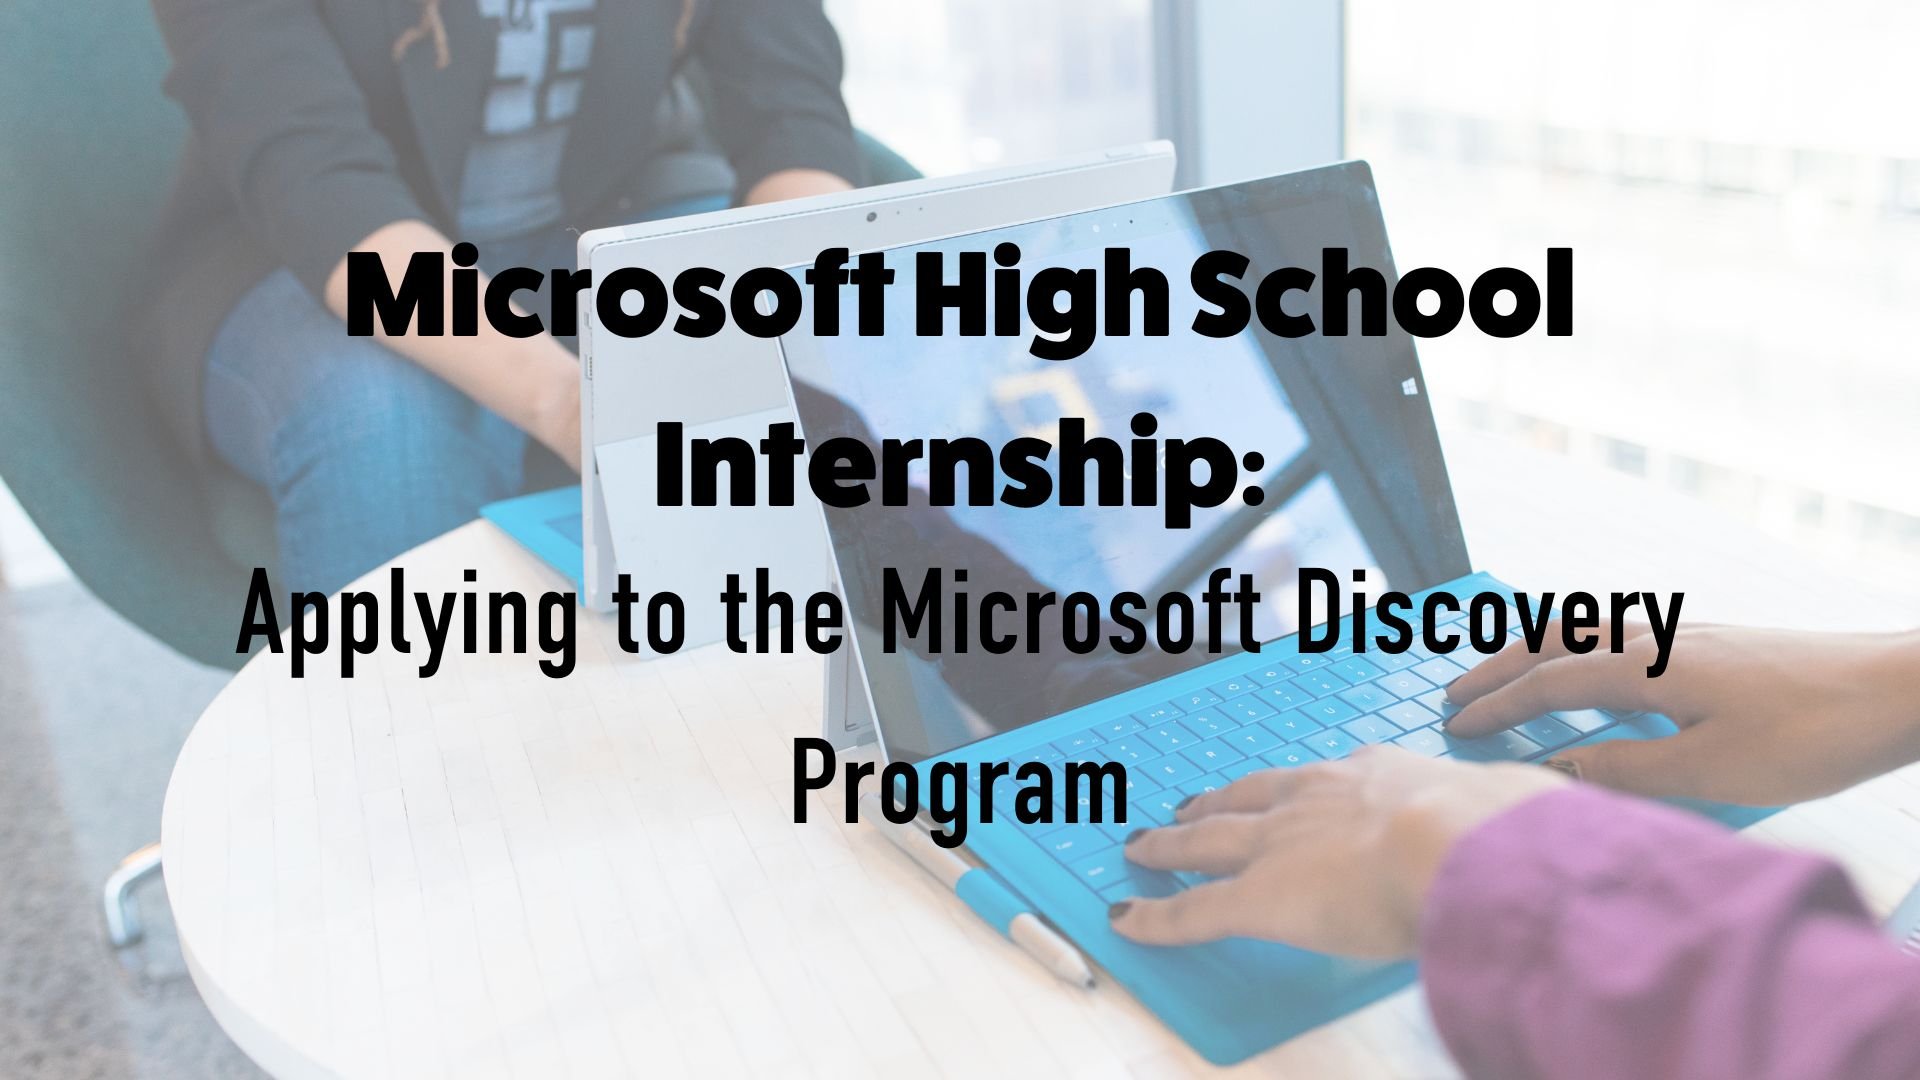 Microsoft High School Internship Applying to the Microsoft Discovery